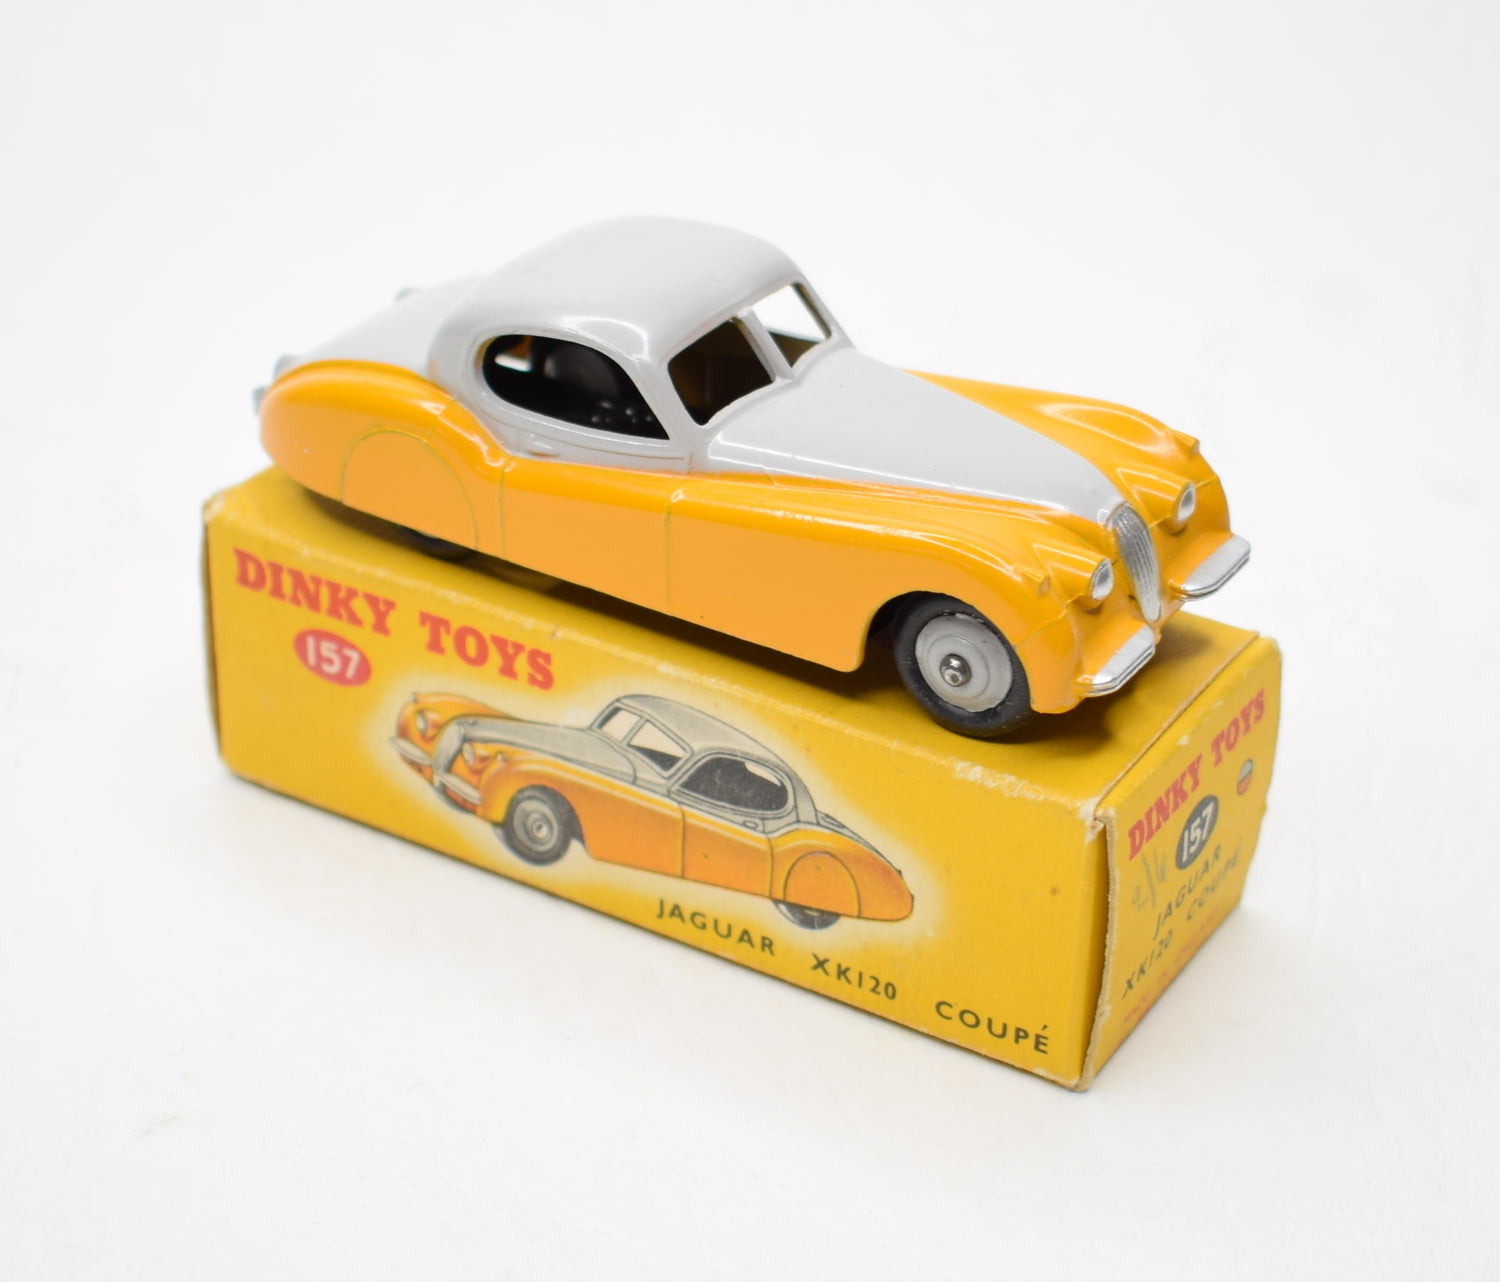 Dinky Toys 157 Jaguar Xk 120 Very Near Mint/Boxed (C.C)